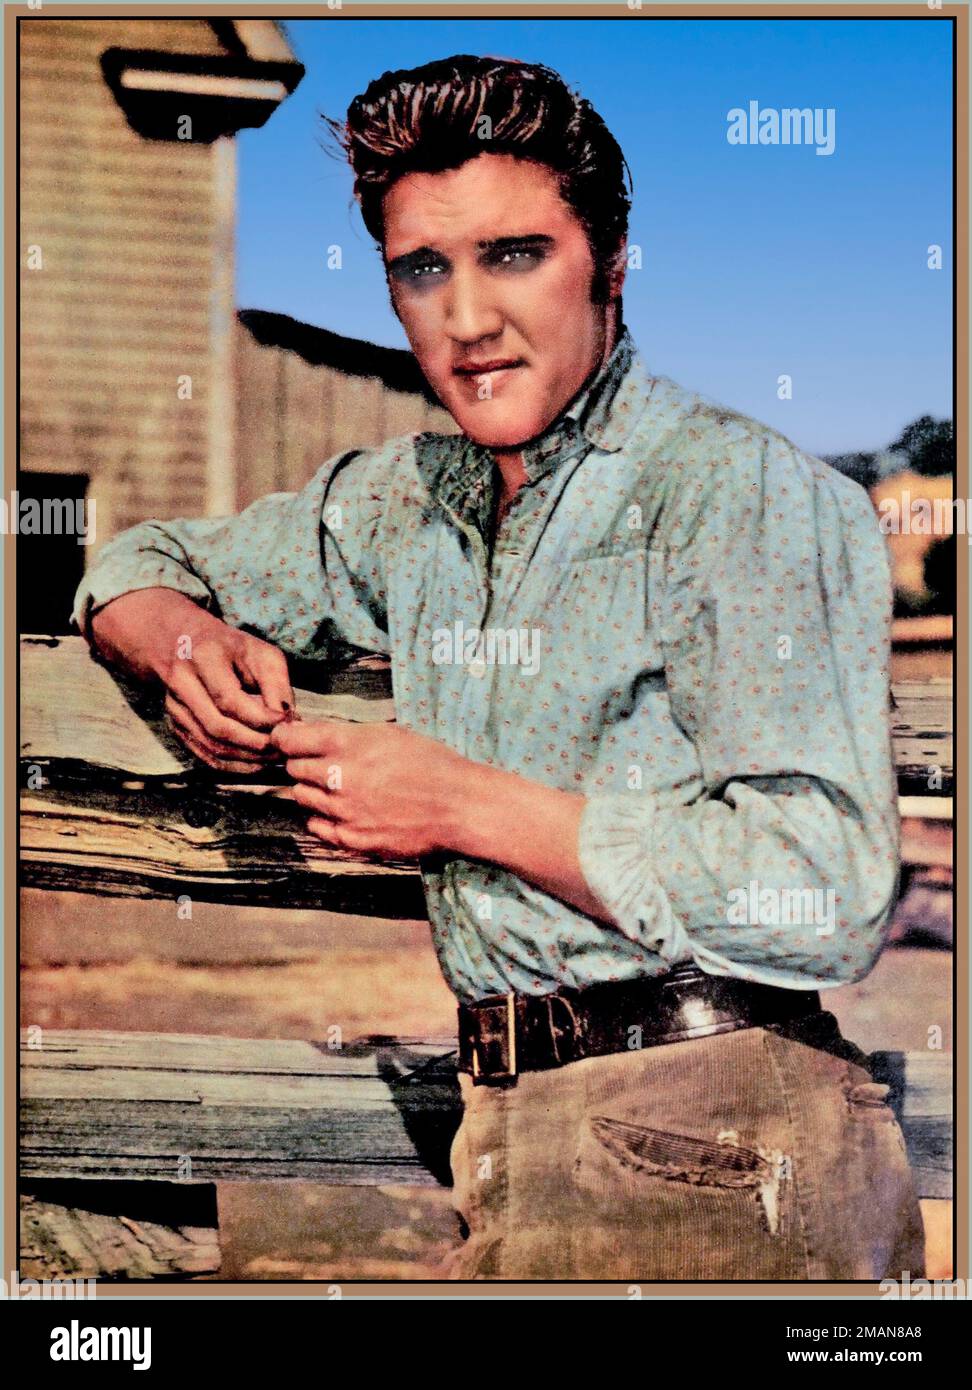 Elvis Presley nel film “Love Me Tender” Vintage 1950s Pubblicità ancora sul set cinematografico 1 gennaio 1957 Hollywood USA Foto Stock